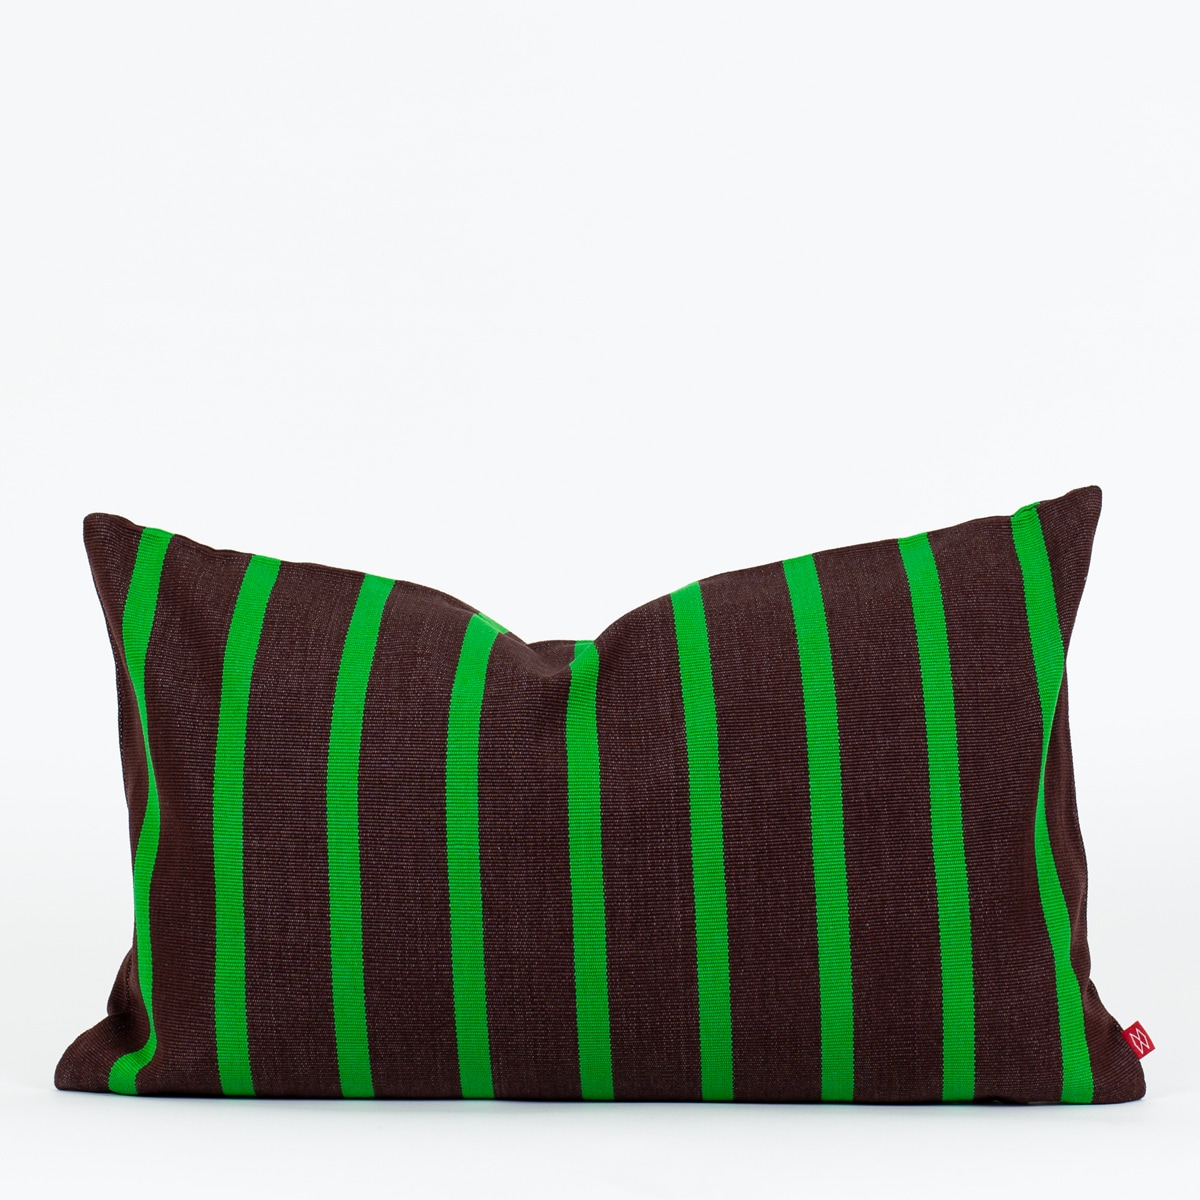 AMERICA Cushion cover 30x50, brown/green